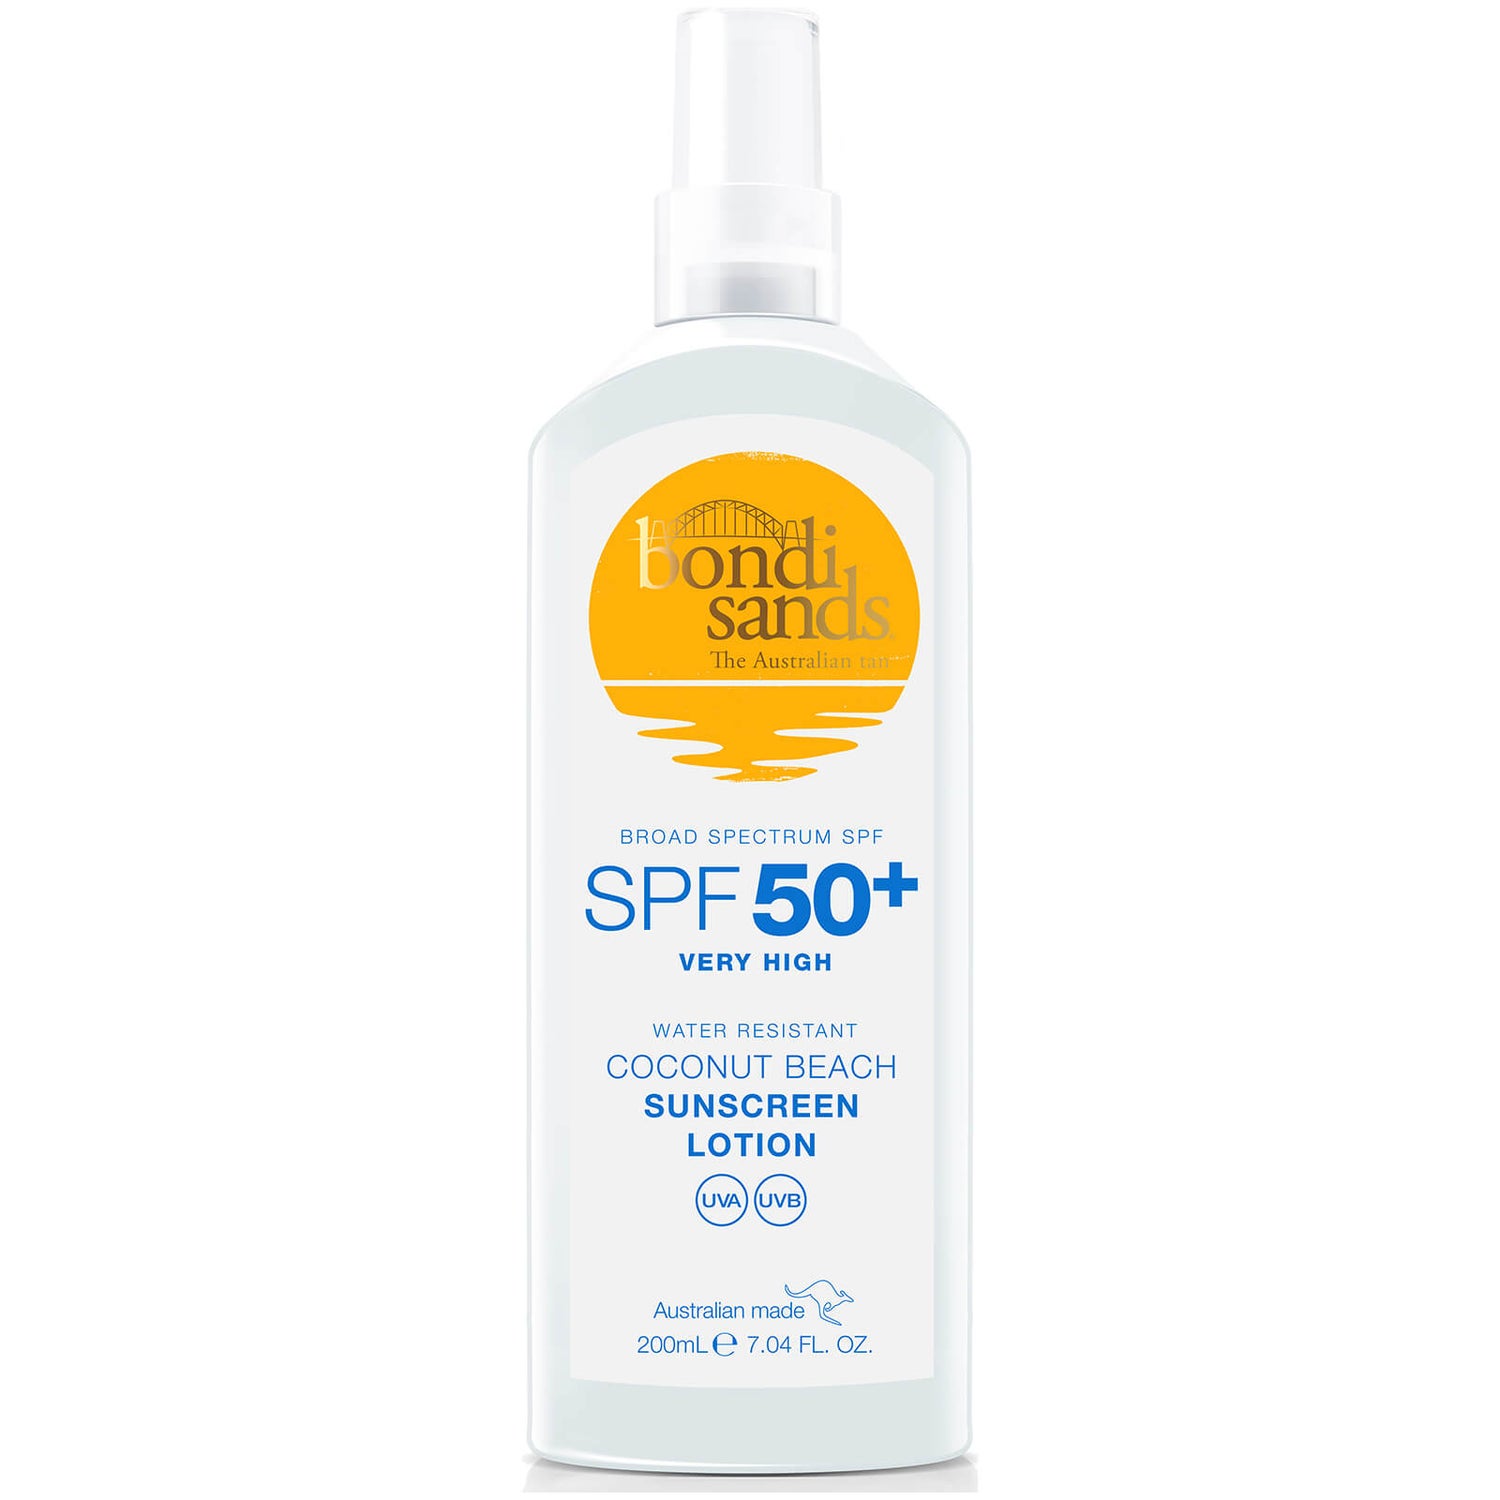 Bondi Sands Sunscreen SPF50+ Lotion 200 ml